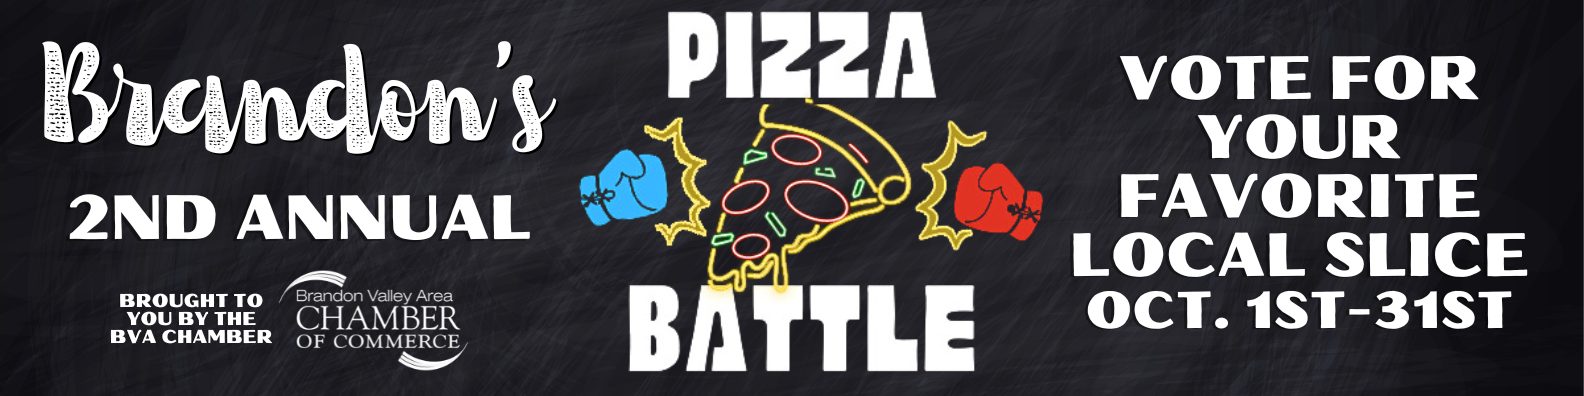 Pizza Battle (Web Banner)